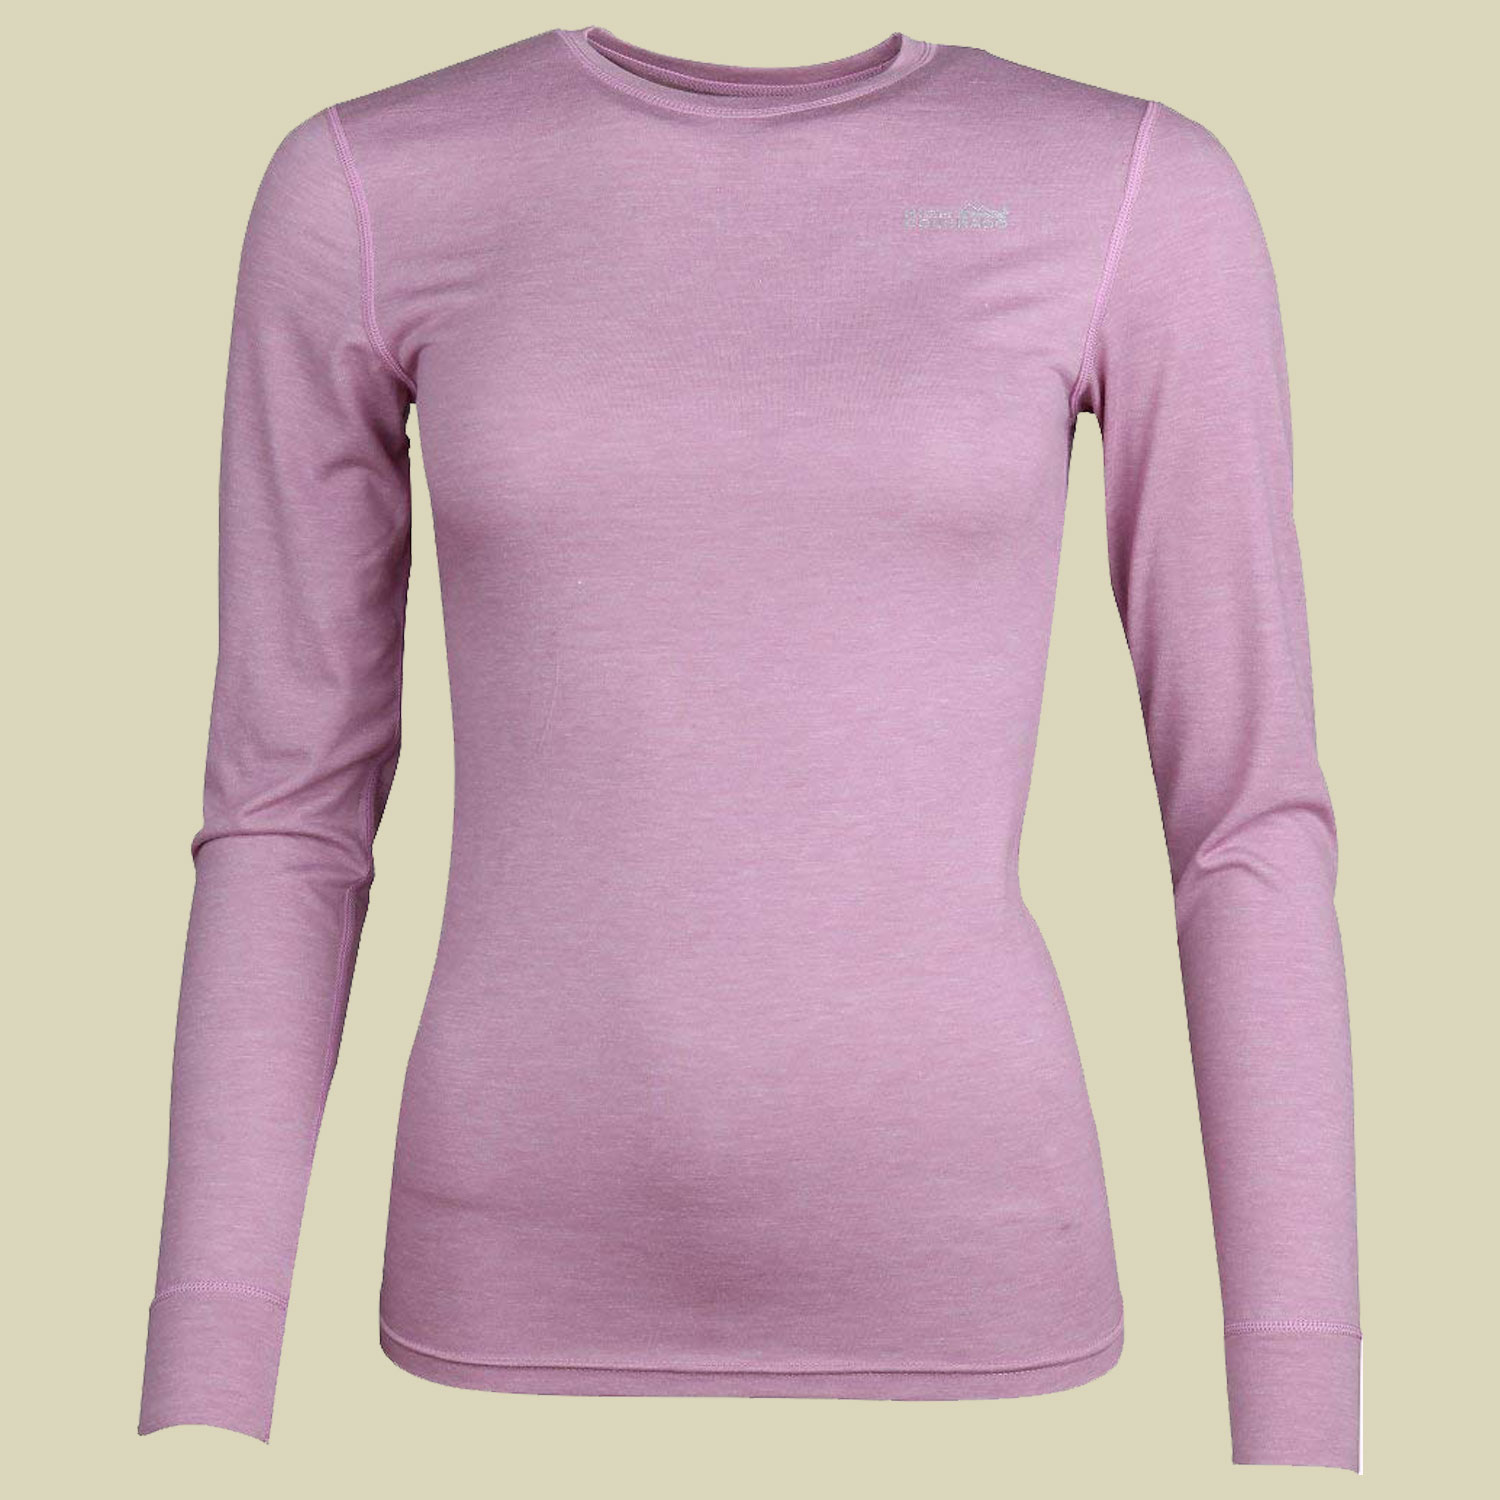 Bergen Langarm-Shirt Women Größe 36 Farbe 4303 rose melange